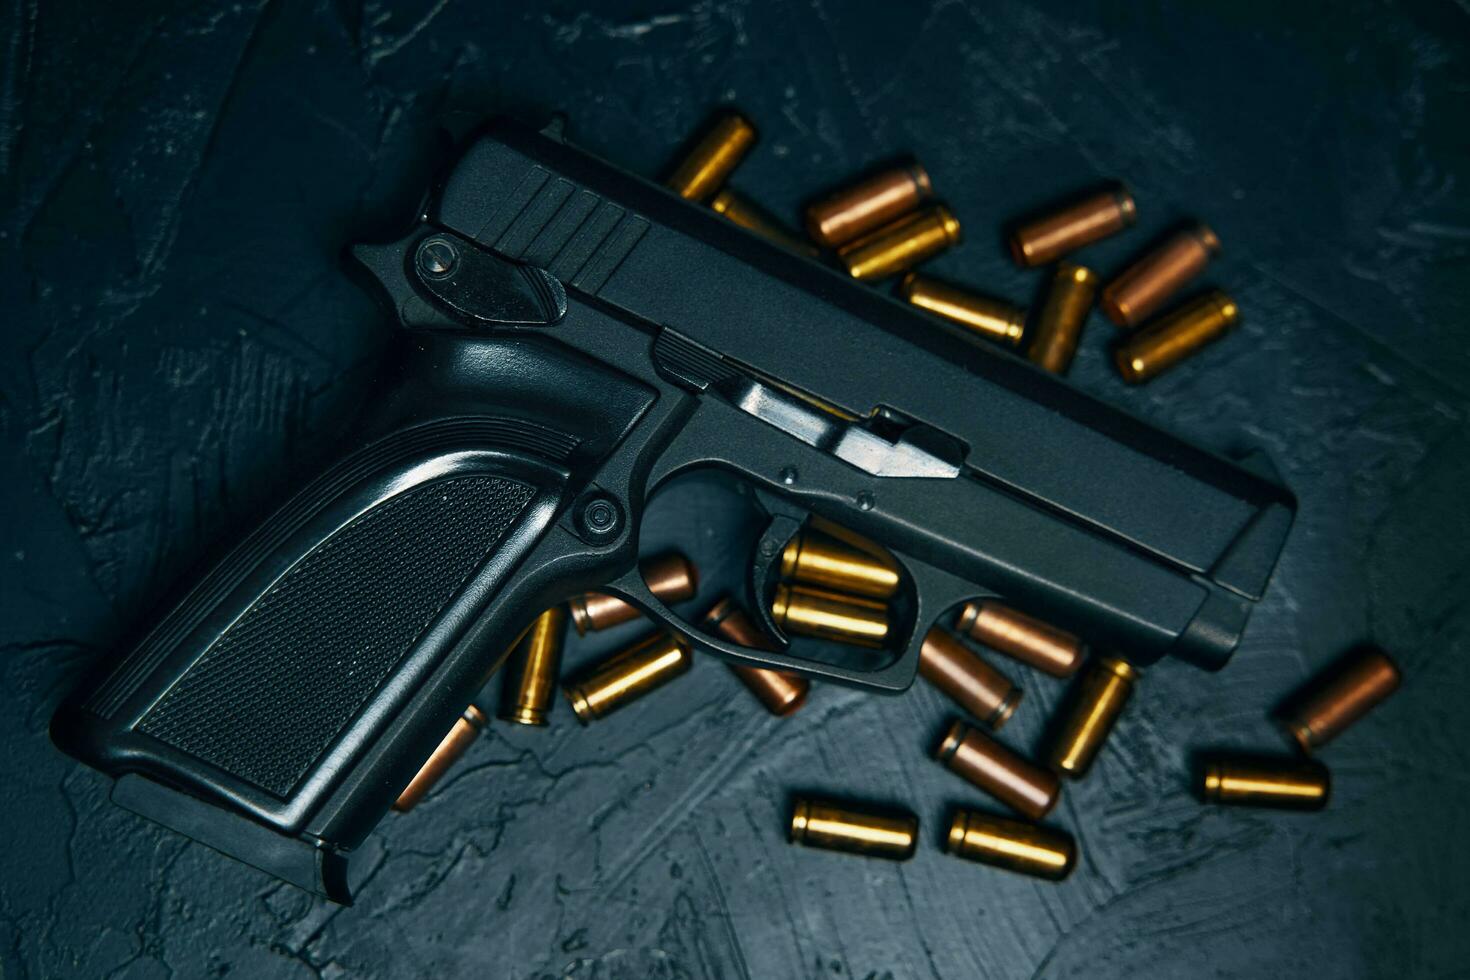 Gun with cartridges on dark concrete table. photo